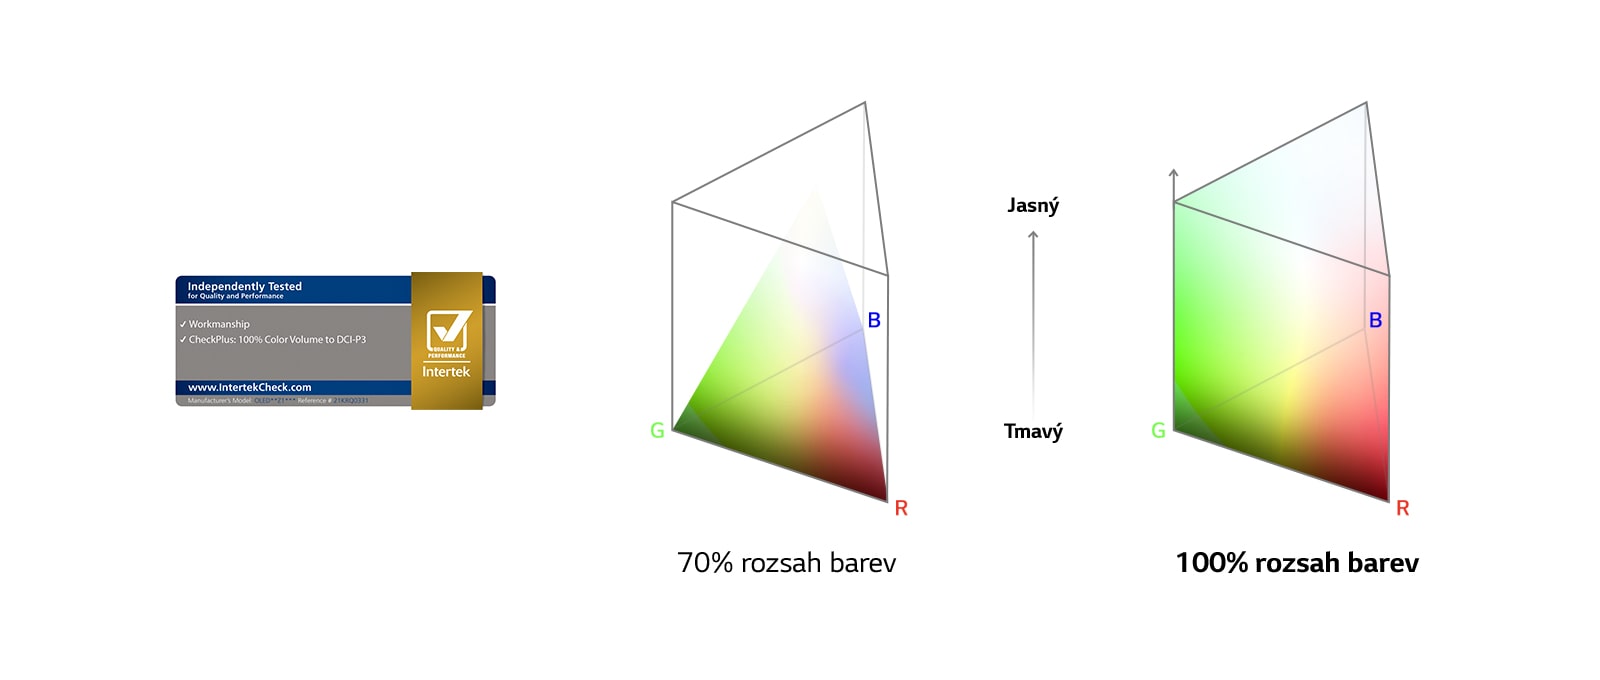 Logo 100% rozsah barev certifikovaný společností Intertek. Srovnávací graf mezi 70% barevného rozsahu a 100% barevného rozsahu.